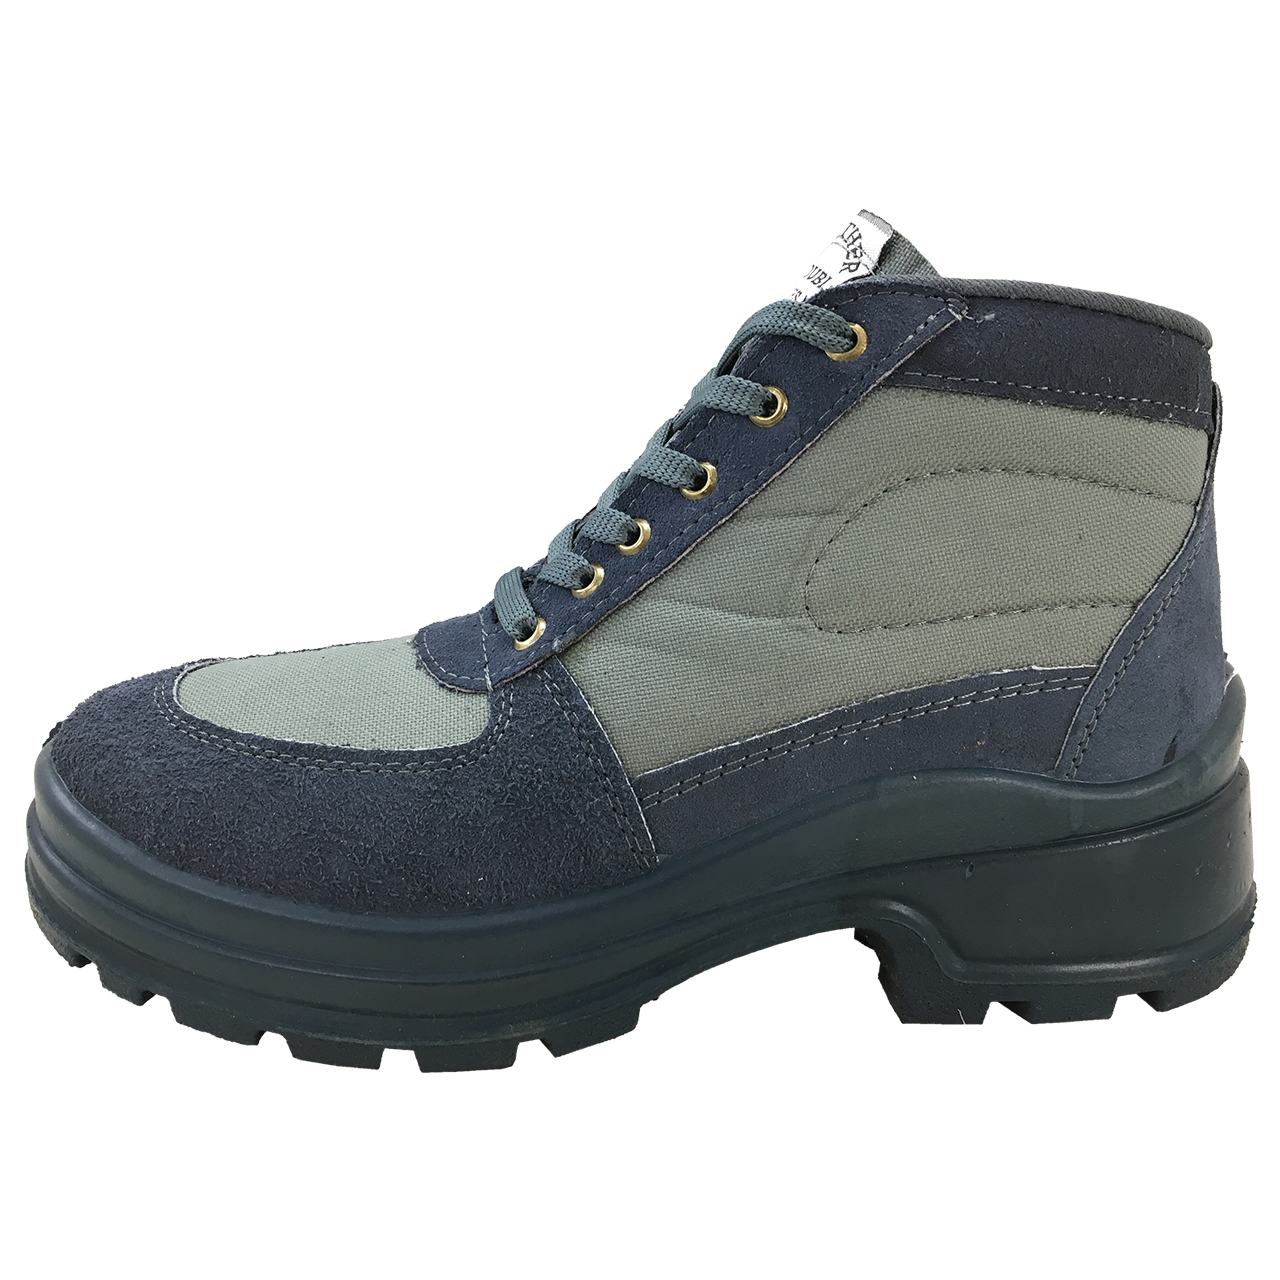 کفش کوهنوردی مردانه اسلوبی مدل دماوند کد 2701